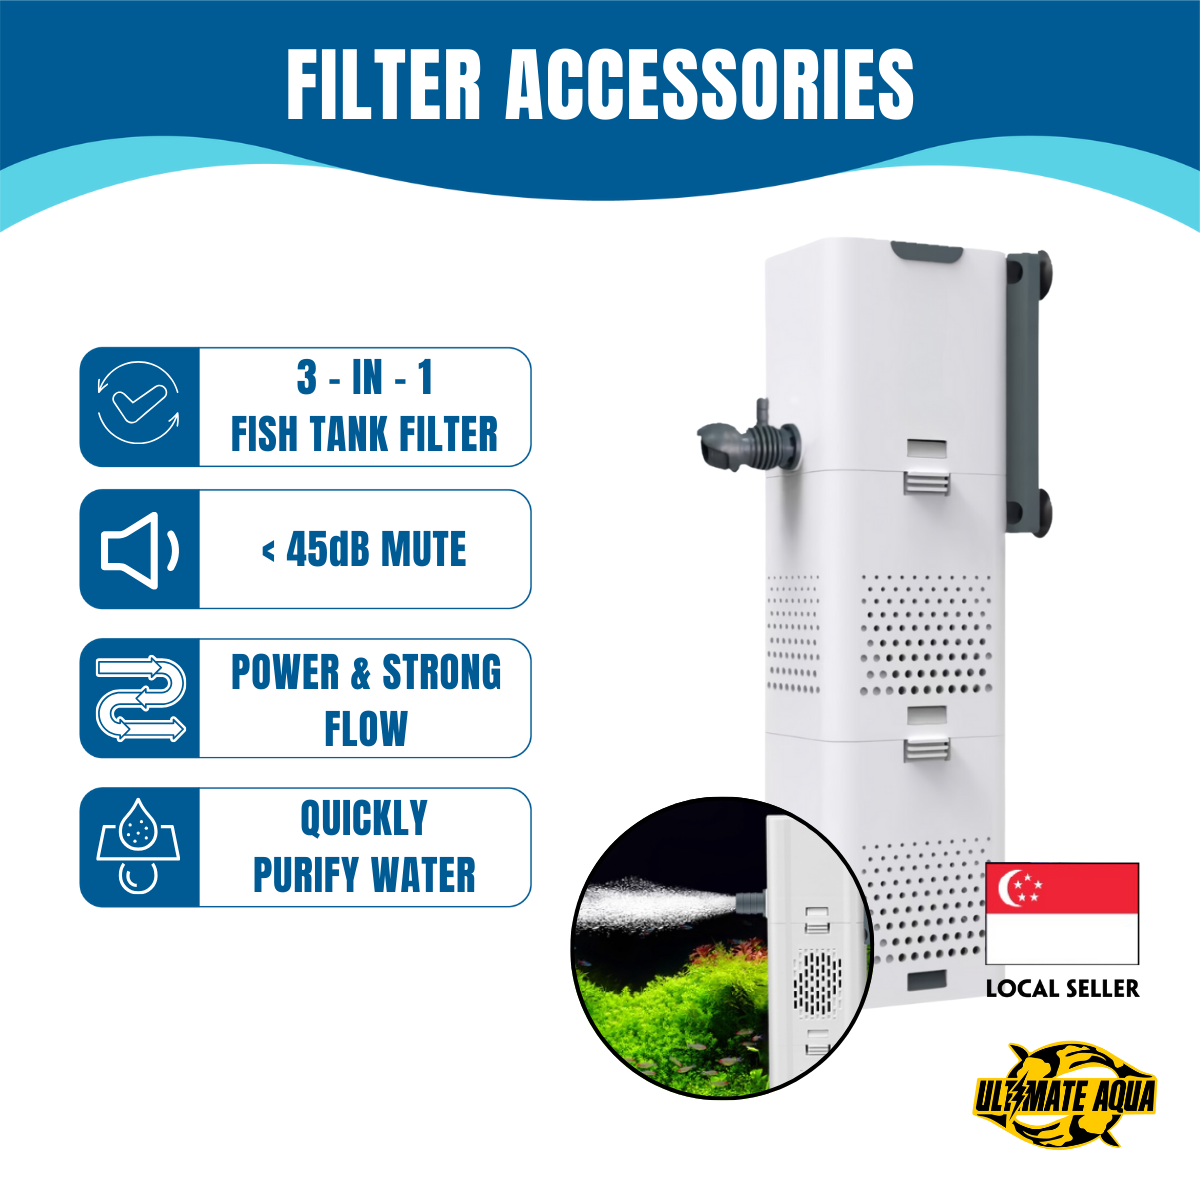 YEE Aquarium Filter Pump, 3-in-1 Fish Tank Filter Silent Aeration smaller than 45db & Submersible Pump